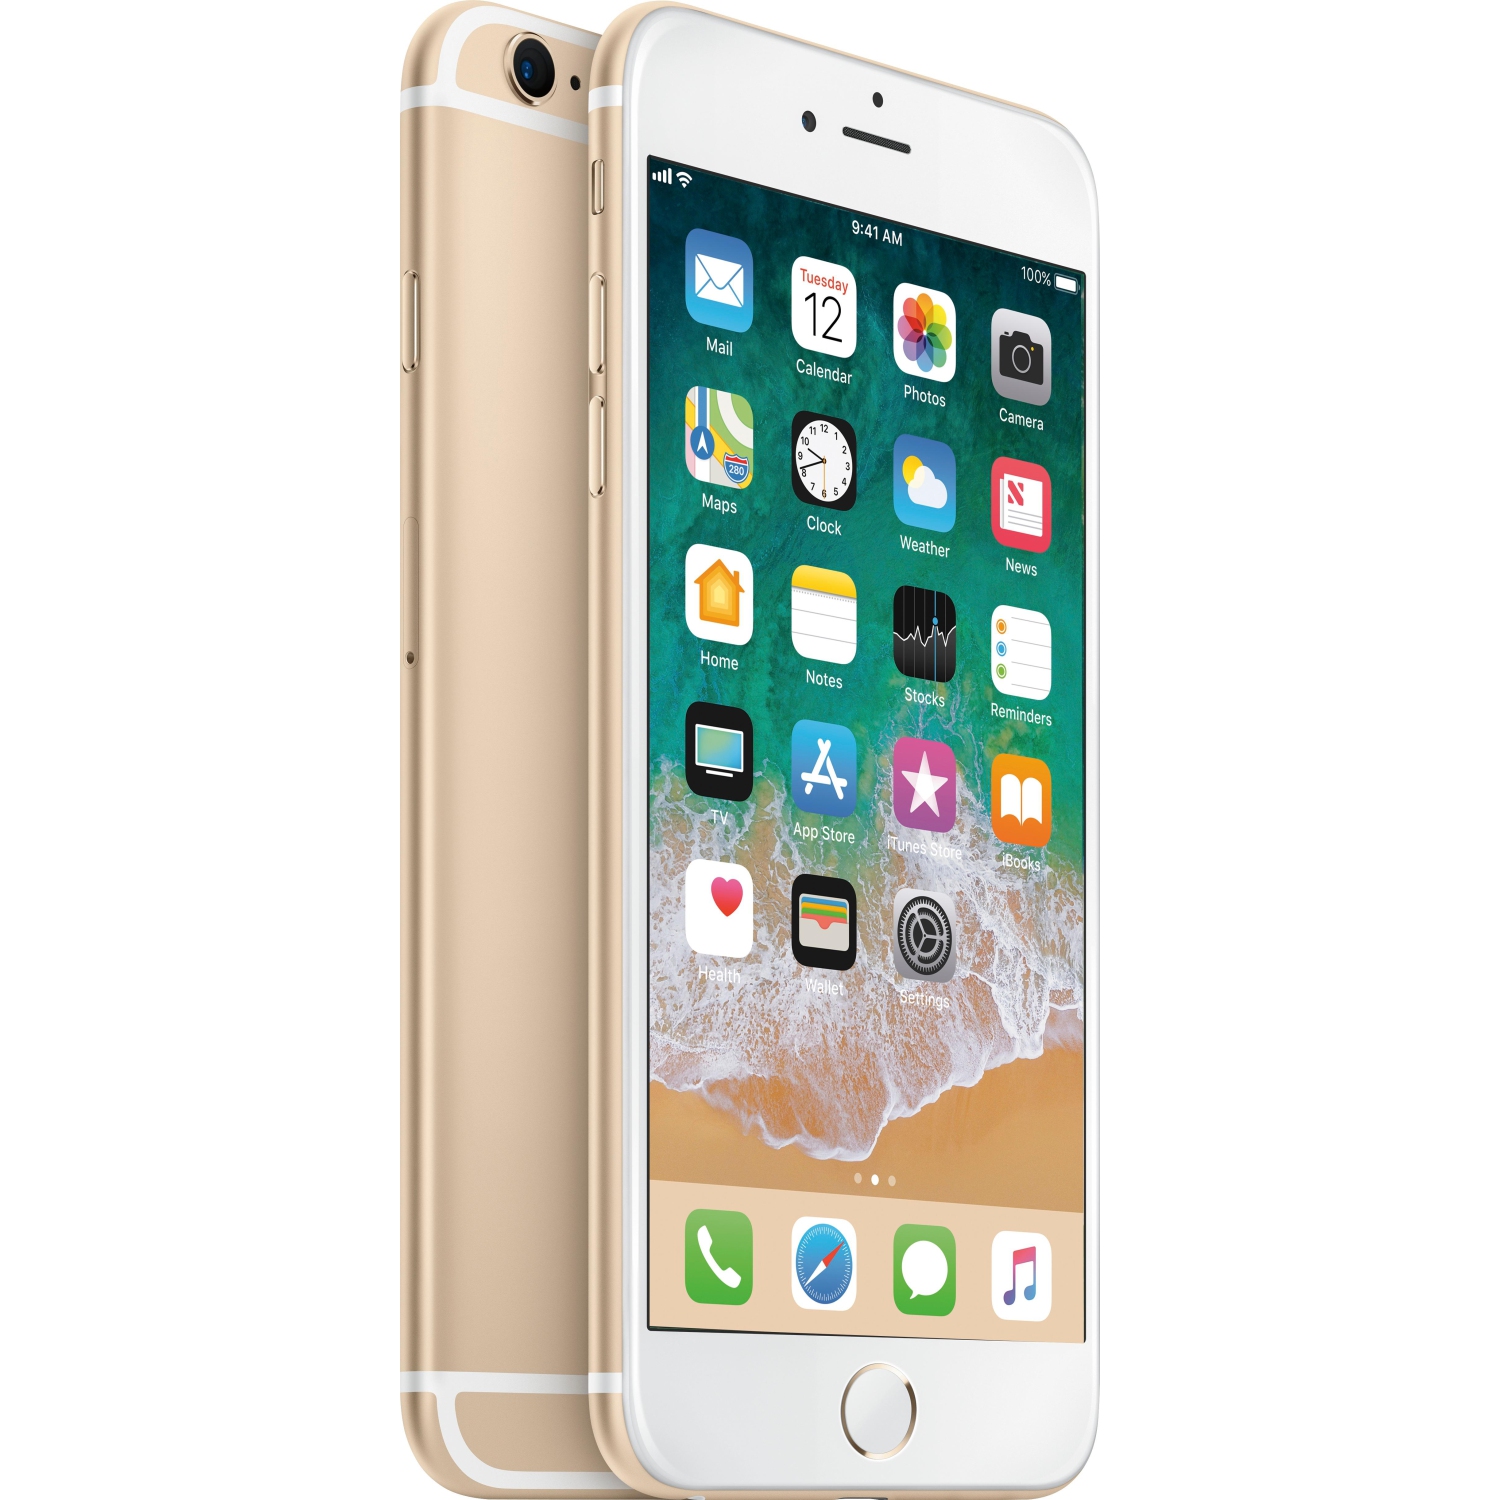 Refurbished (Good) - Apple iPhone 6s Plus 64GB Smartphone - Gold - Unlocked